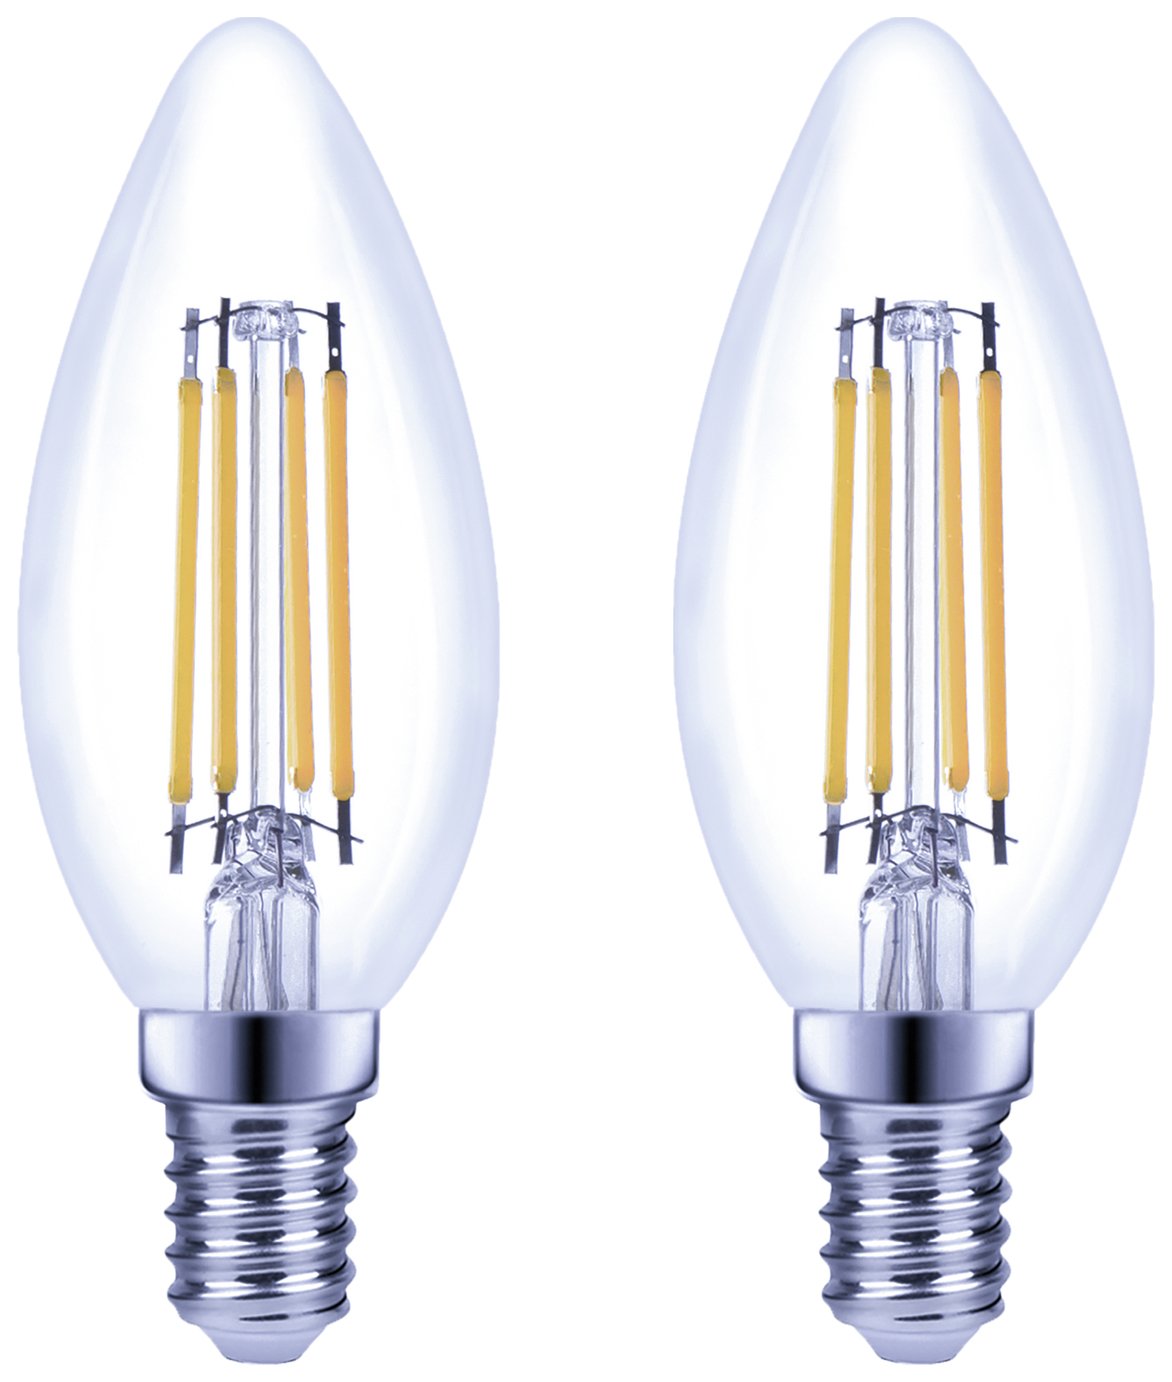 Argos Home 3.4W Filament LED SES Light Bulb - 2 Pack